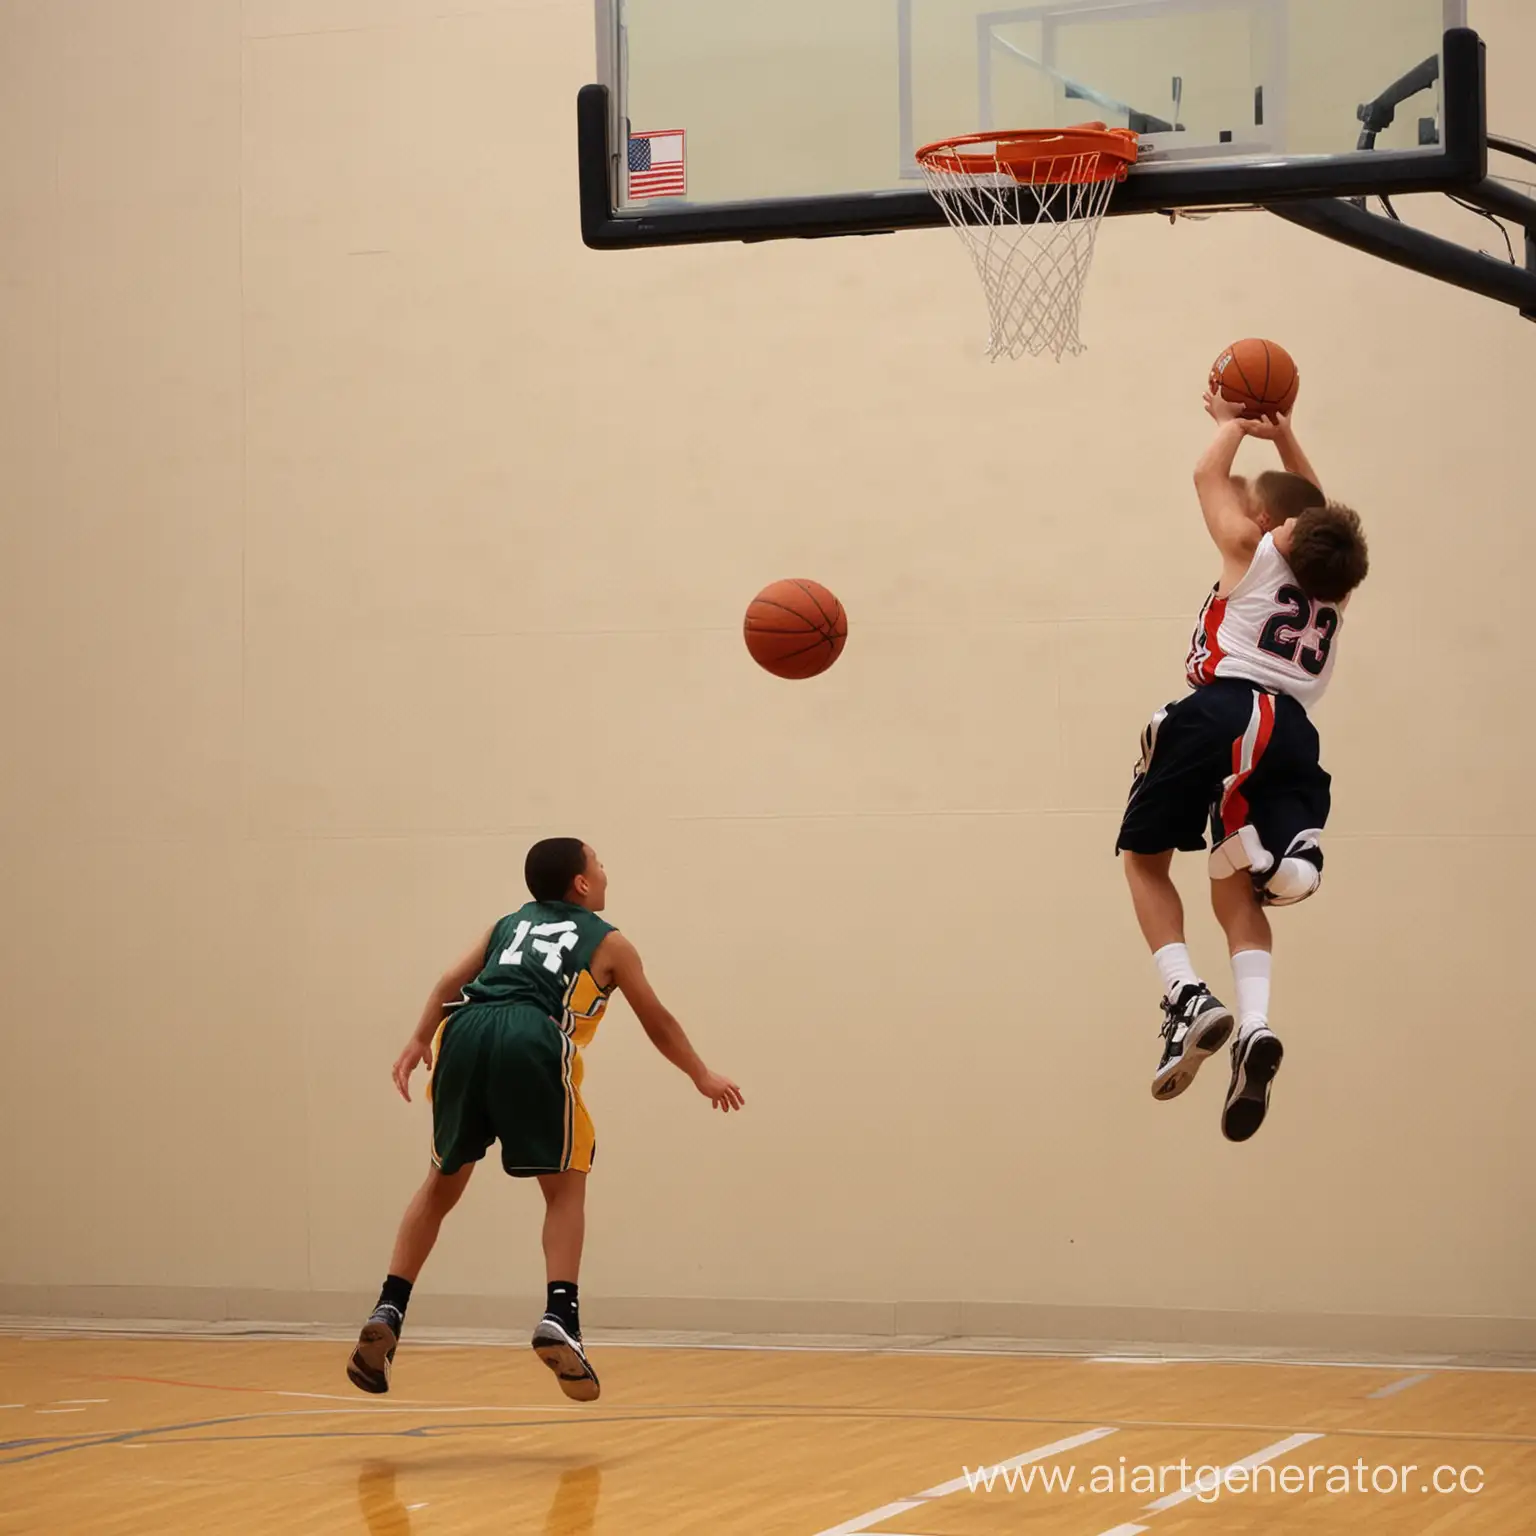 Dynamic-Short-Basketball-Player-Dunking-Ball